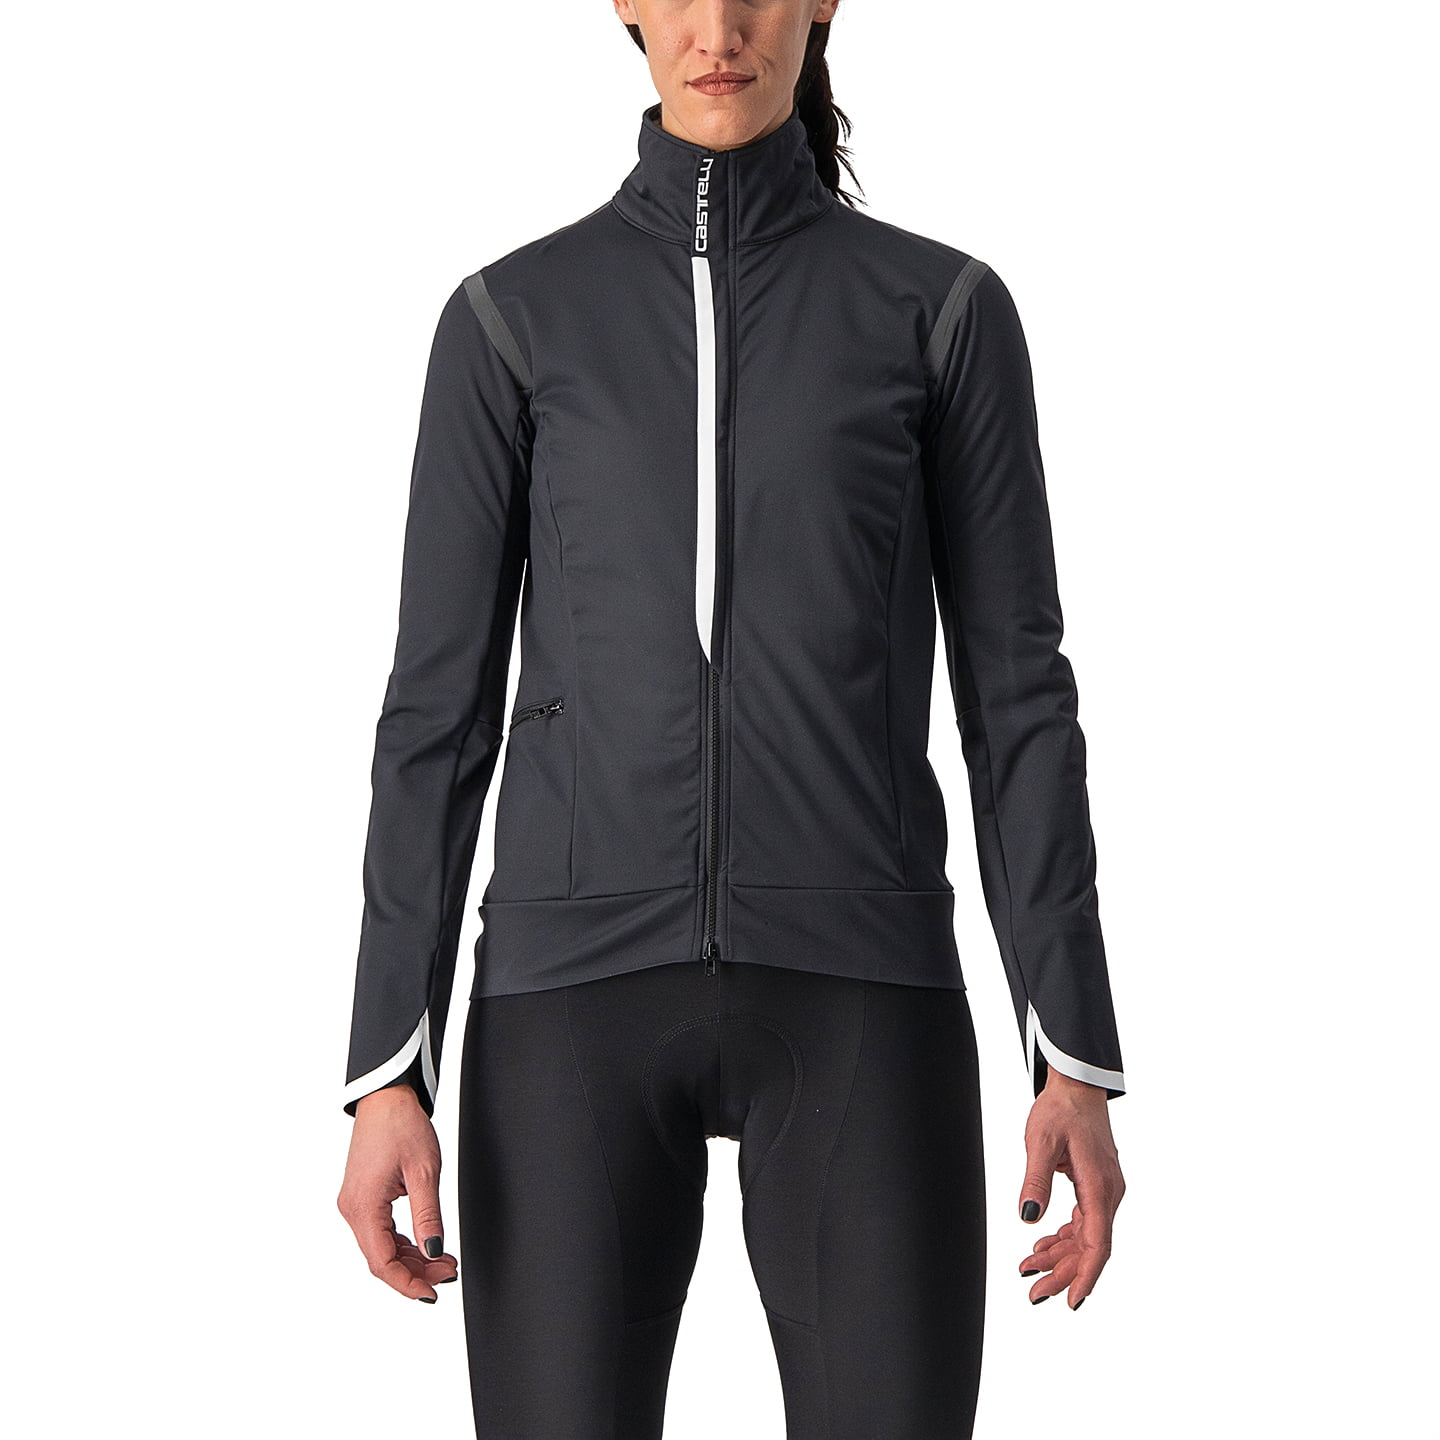 CASTELLI Alpha Ultimate Women’s Winter Jacket Women’s Thermal Jacket, size S, Winter jacket, Cycle clothing